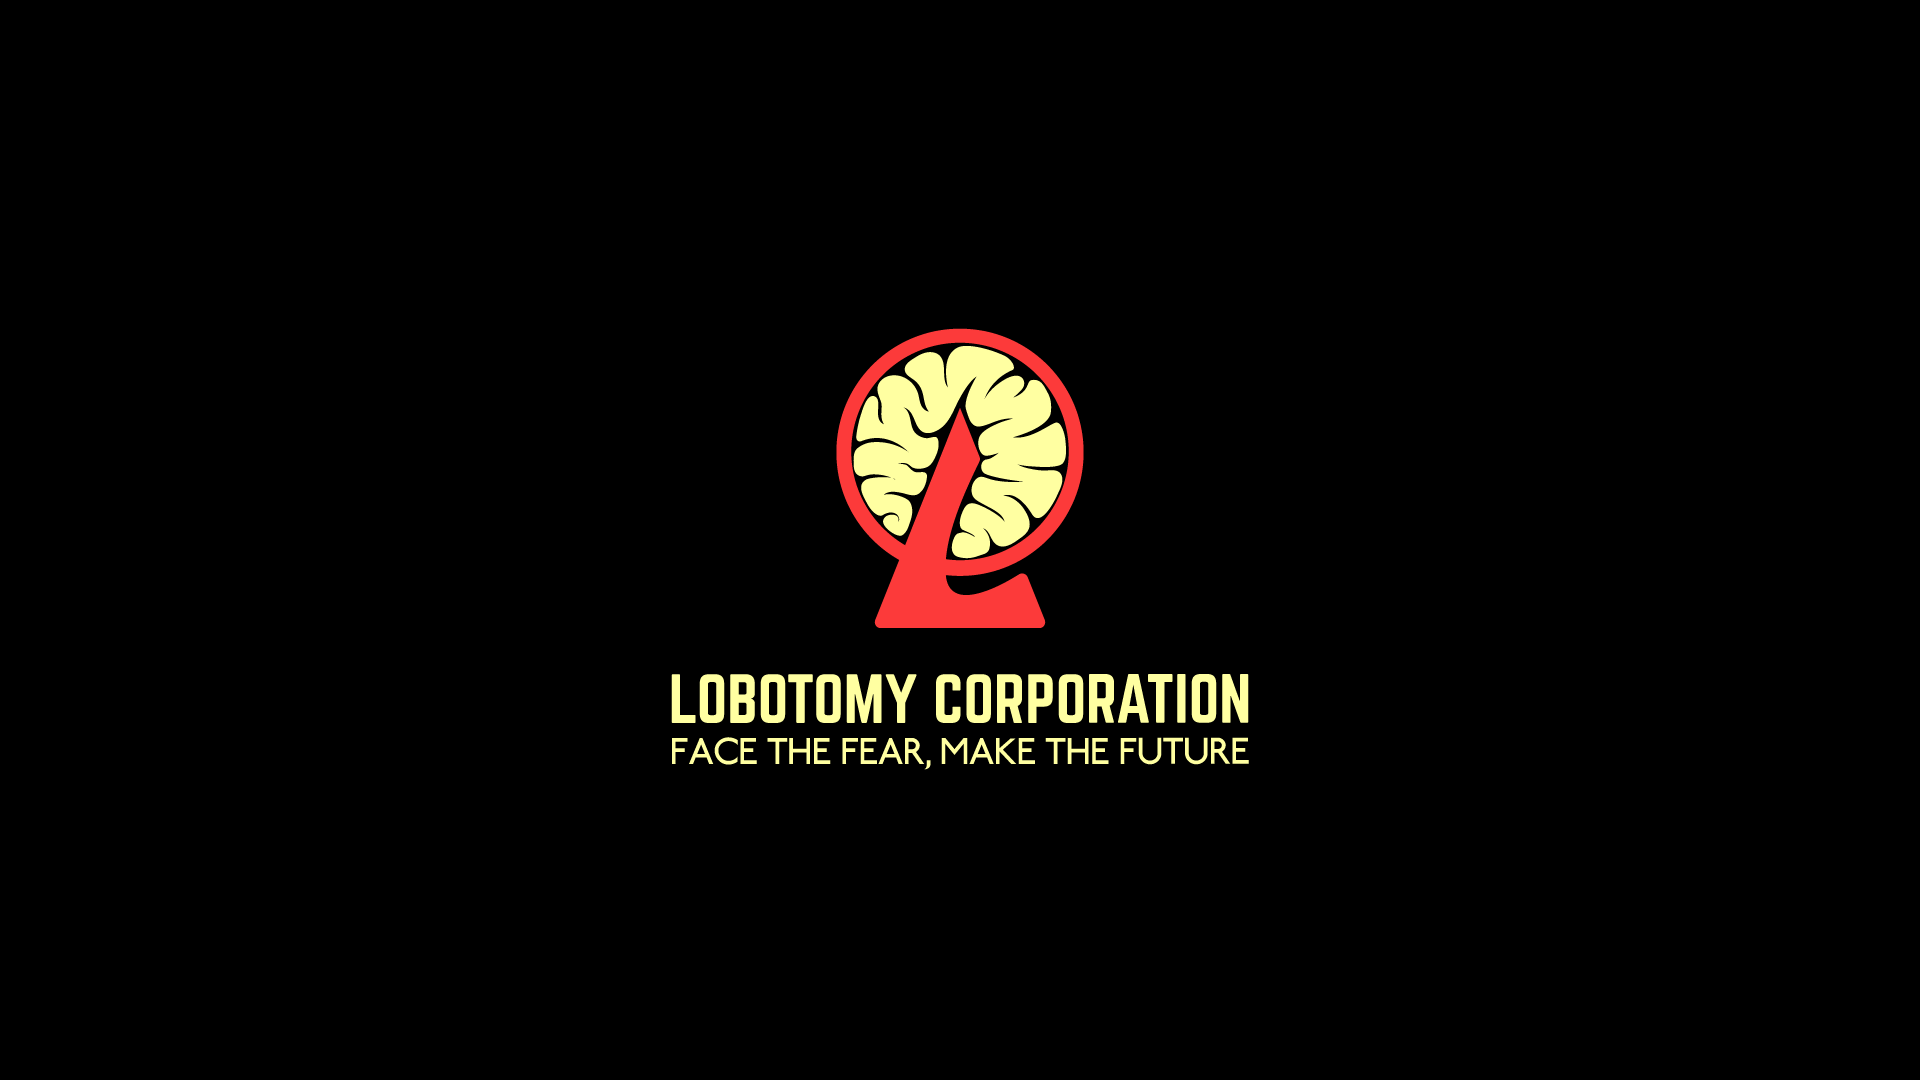 free download lobotomy corporation game